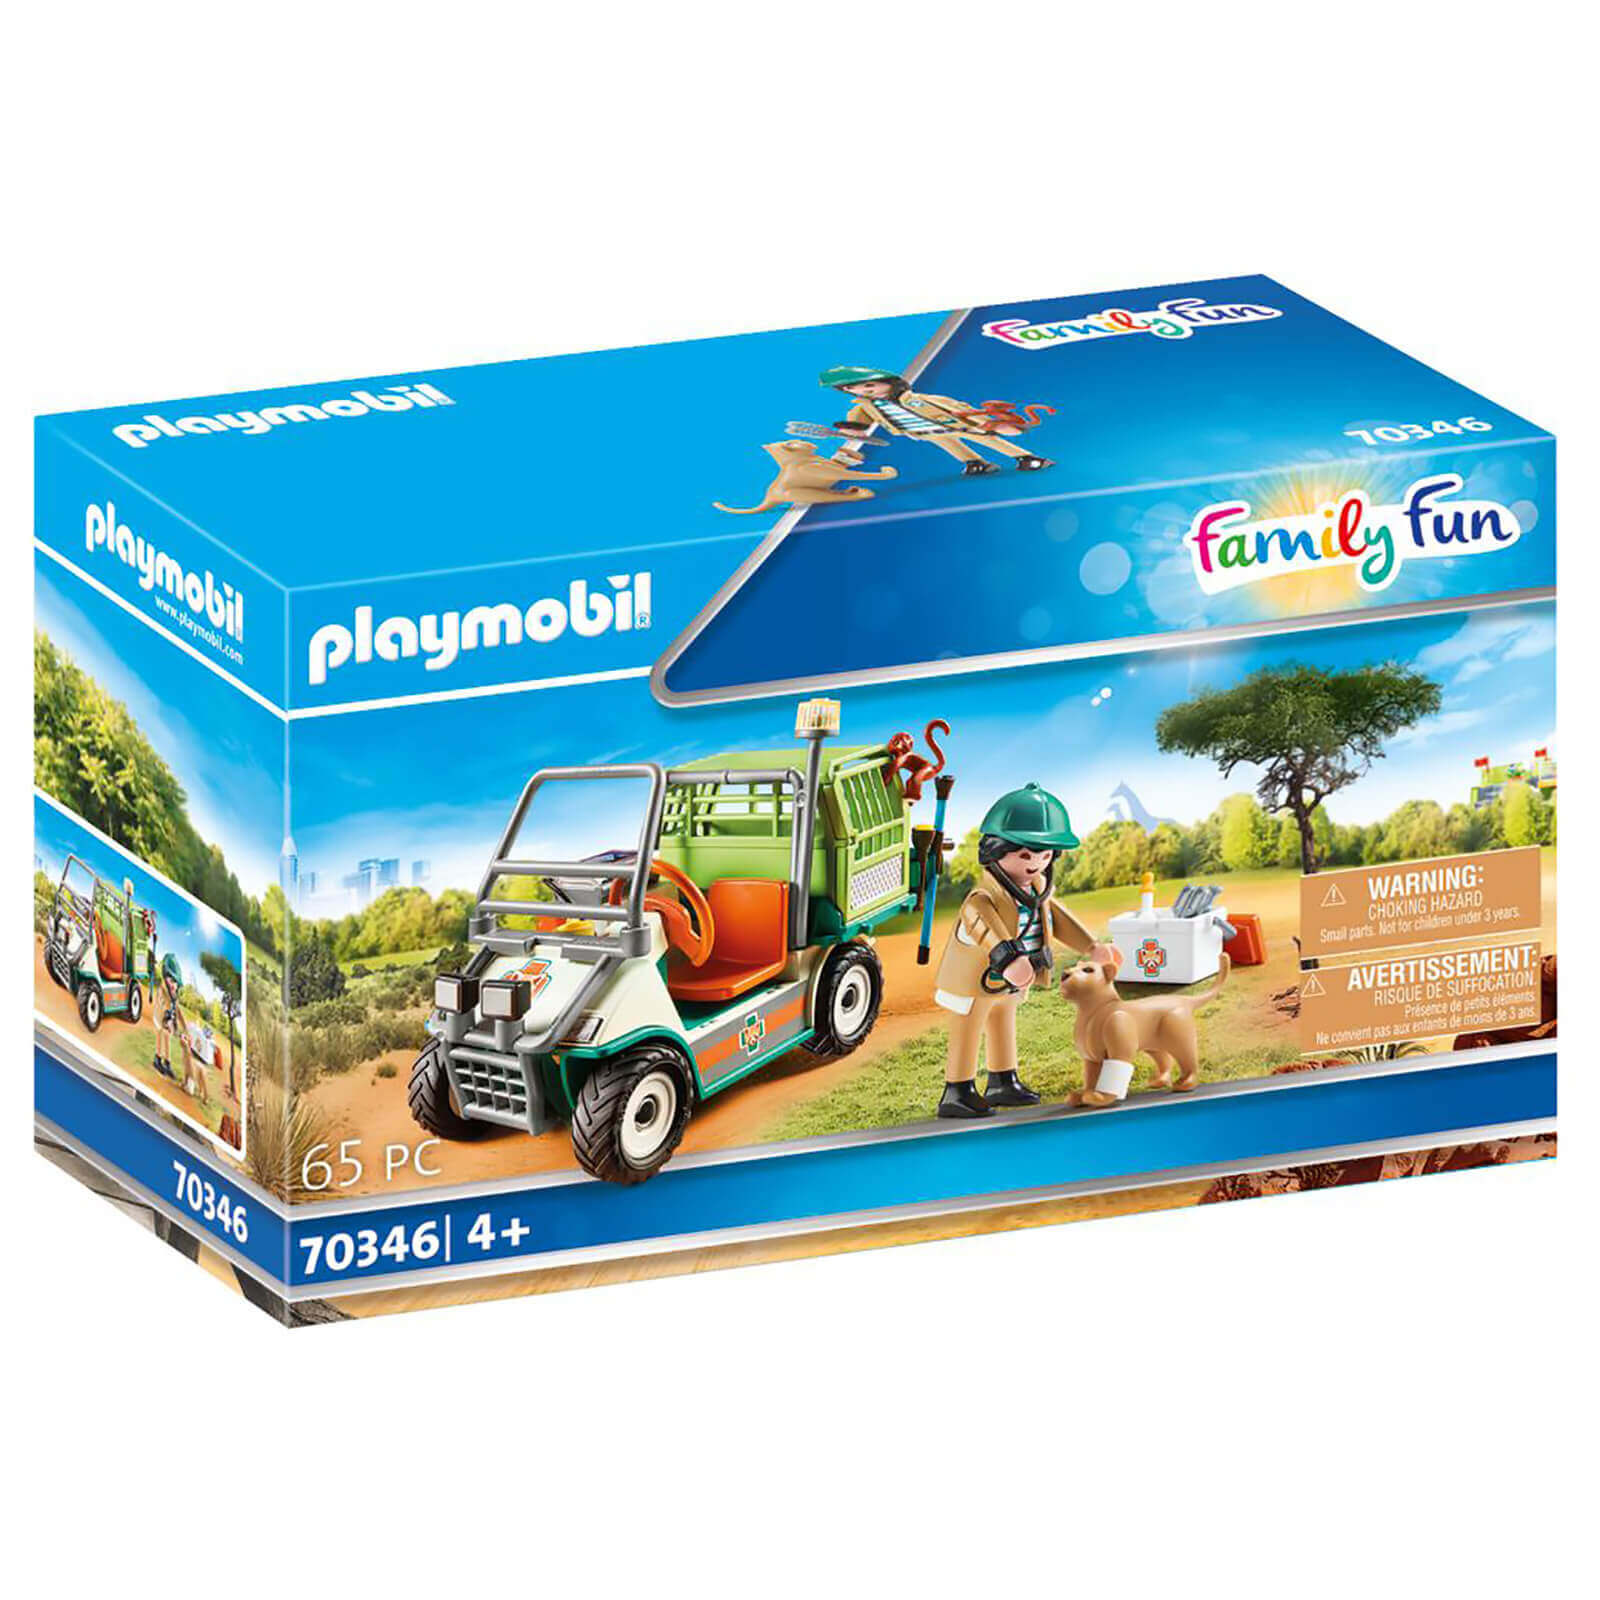 Playmobil Family Fun Zoo Vet With Medical Cart (70346)